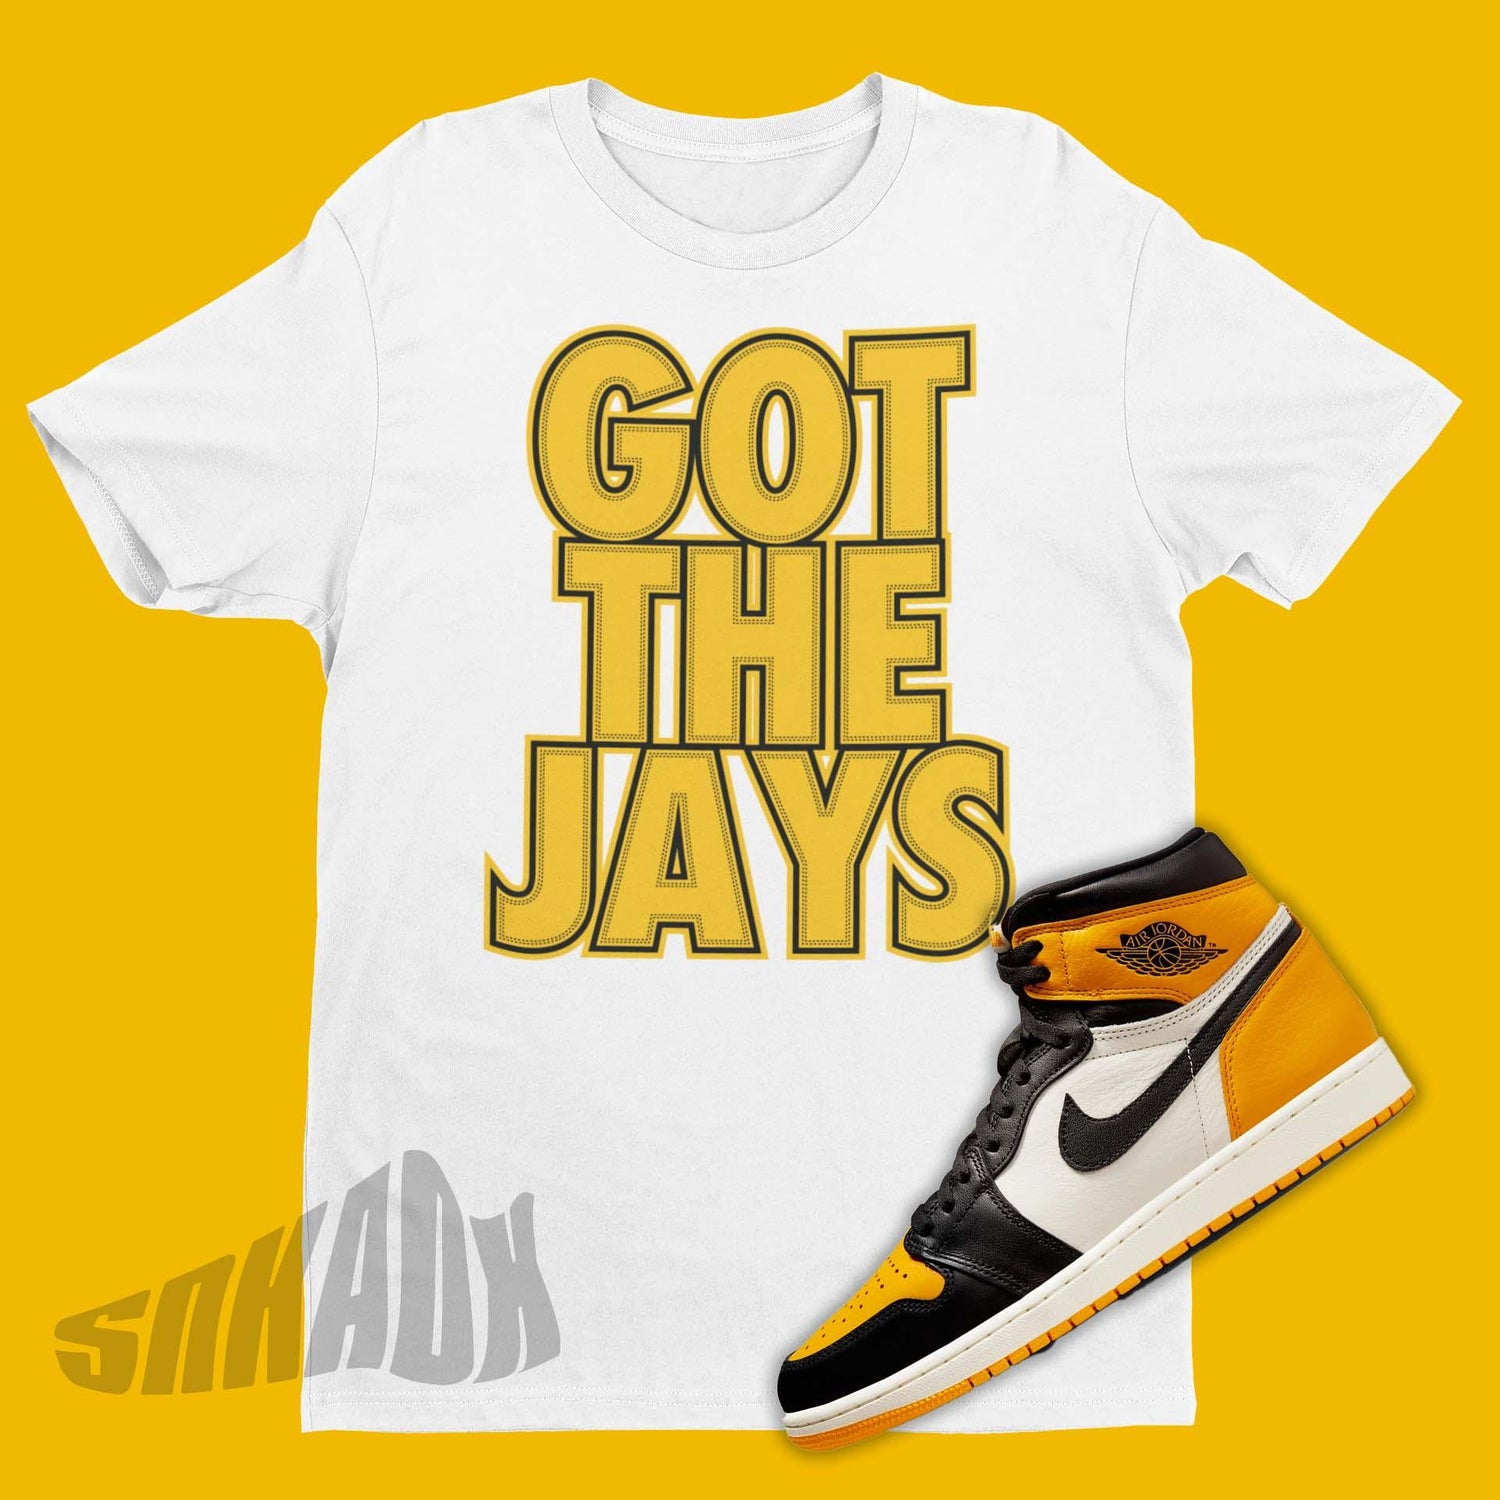 Got The Jays Shirt To Match Air Jordan 1 Retro High OG Taxi - SNKADX